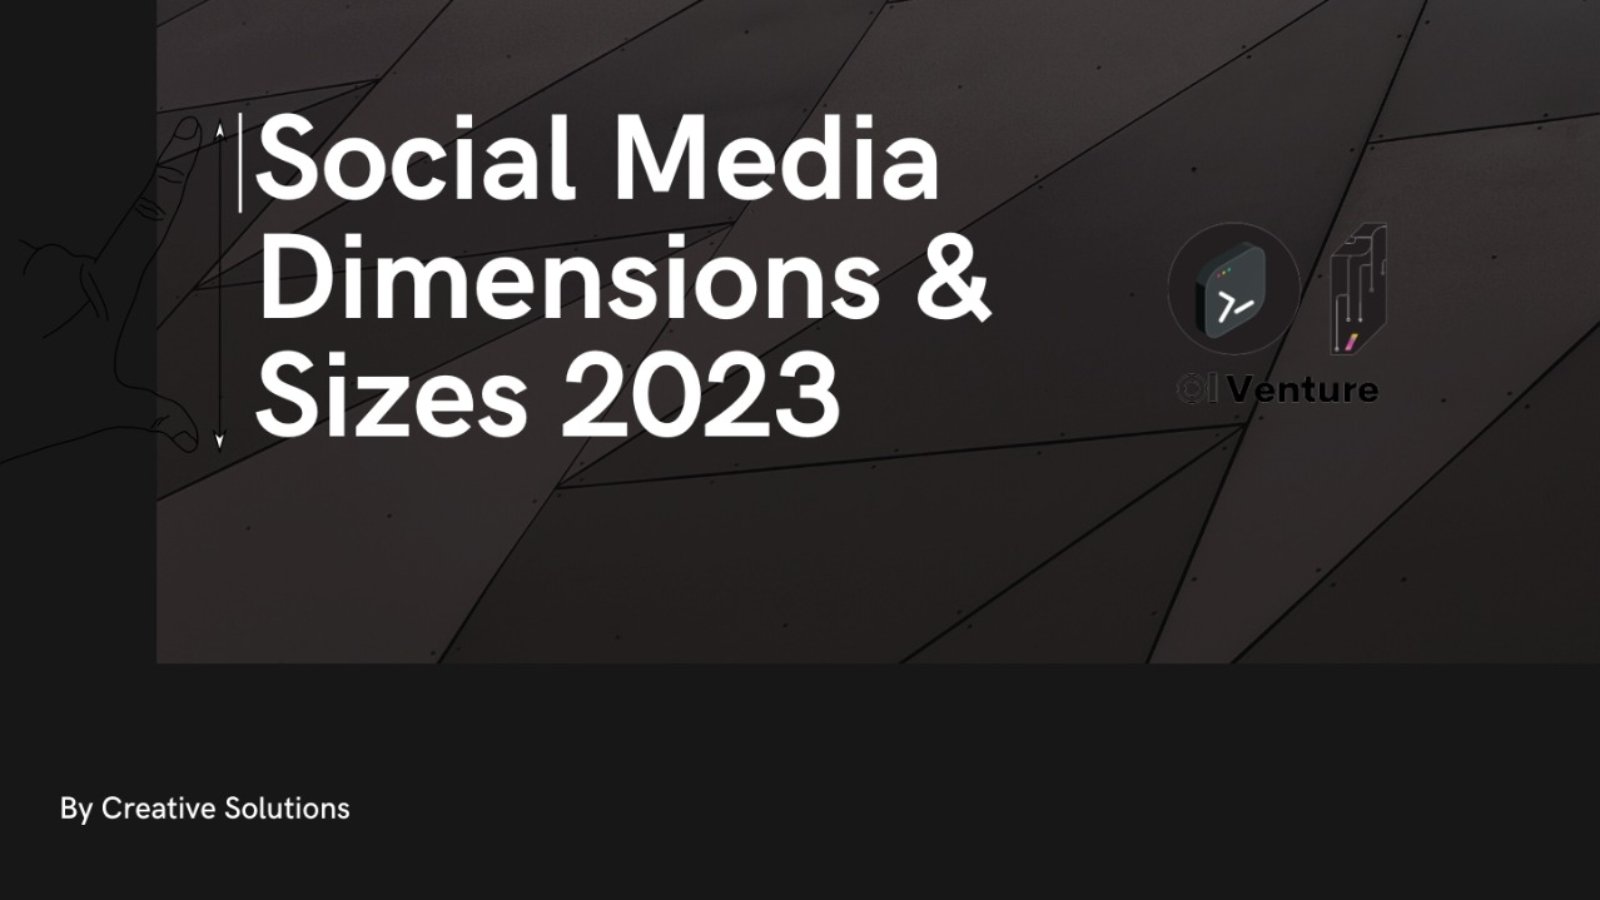 Social Media dimensions & sizes 2023